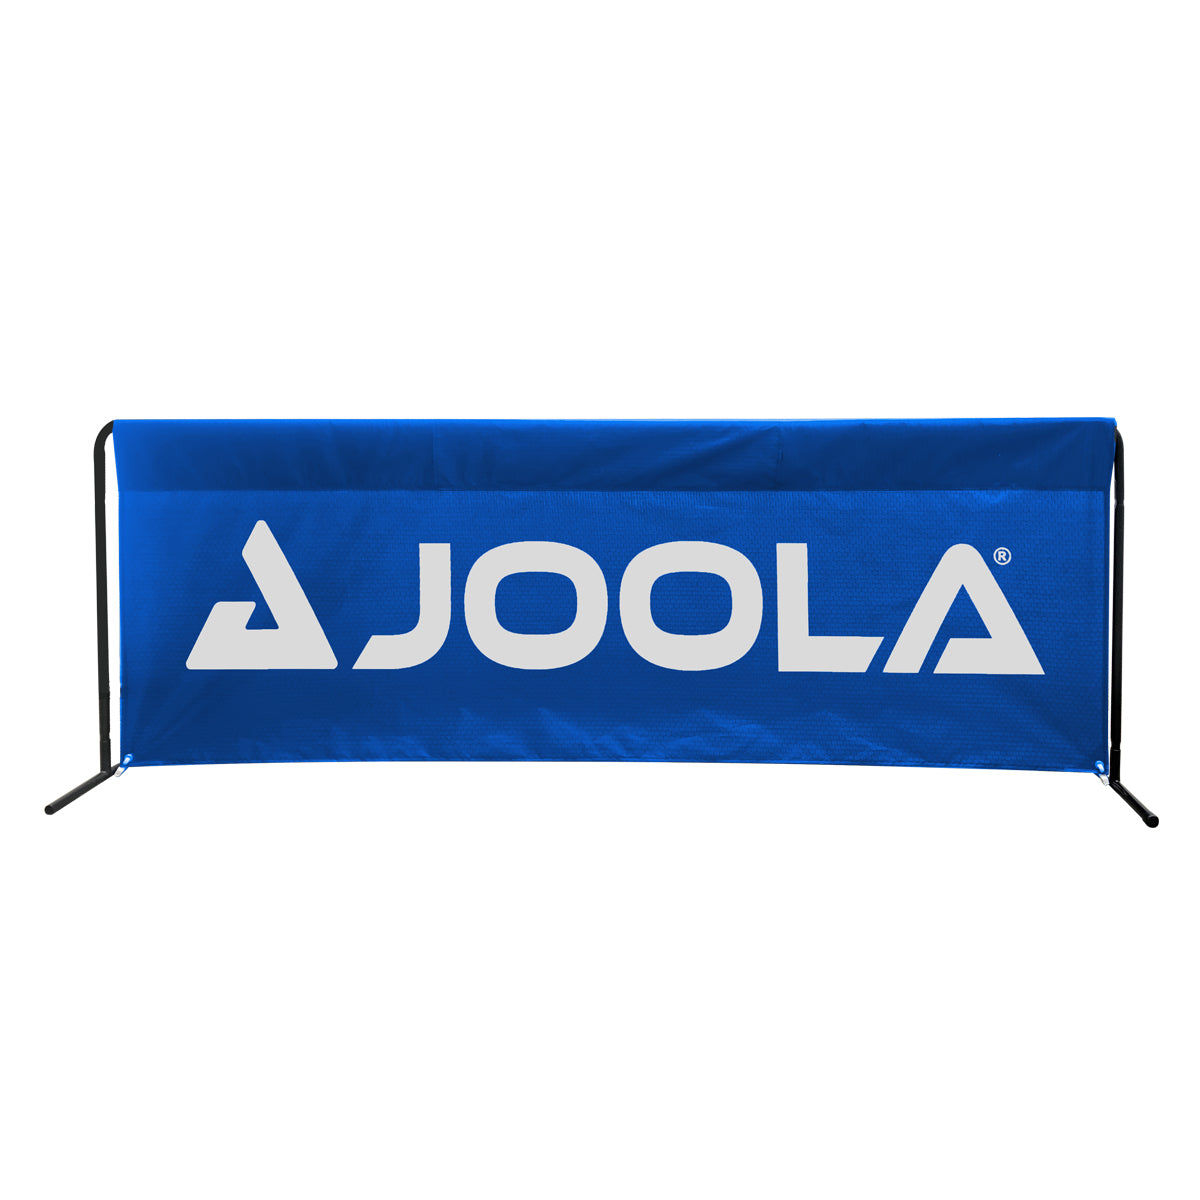 Joola Table Surrounds Blue 2pcs